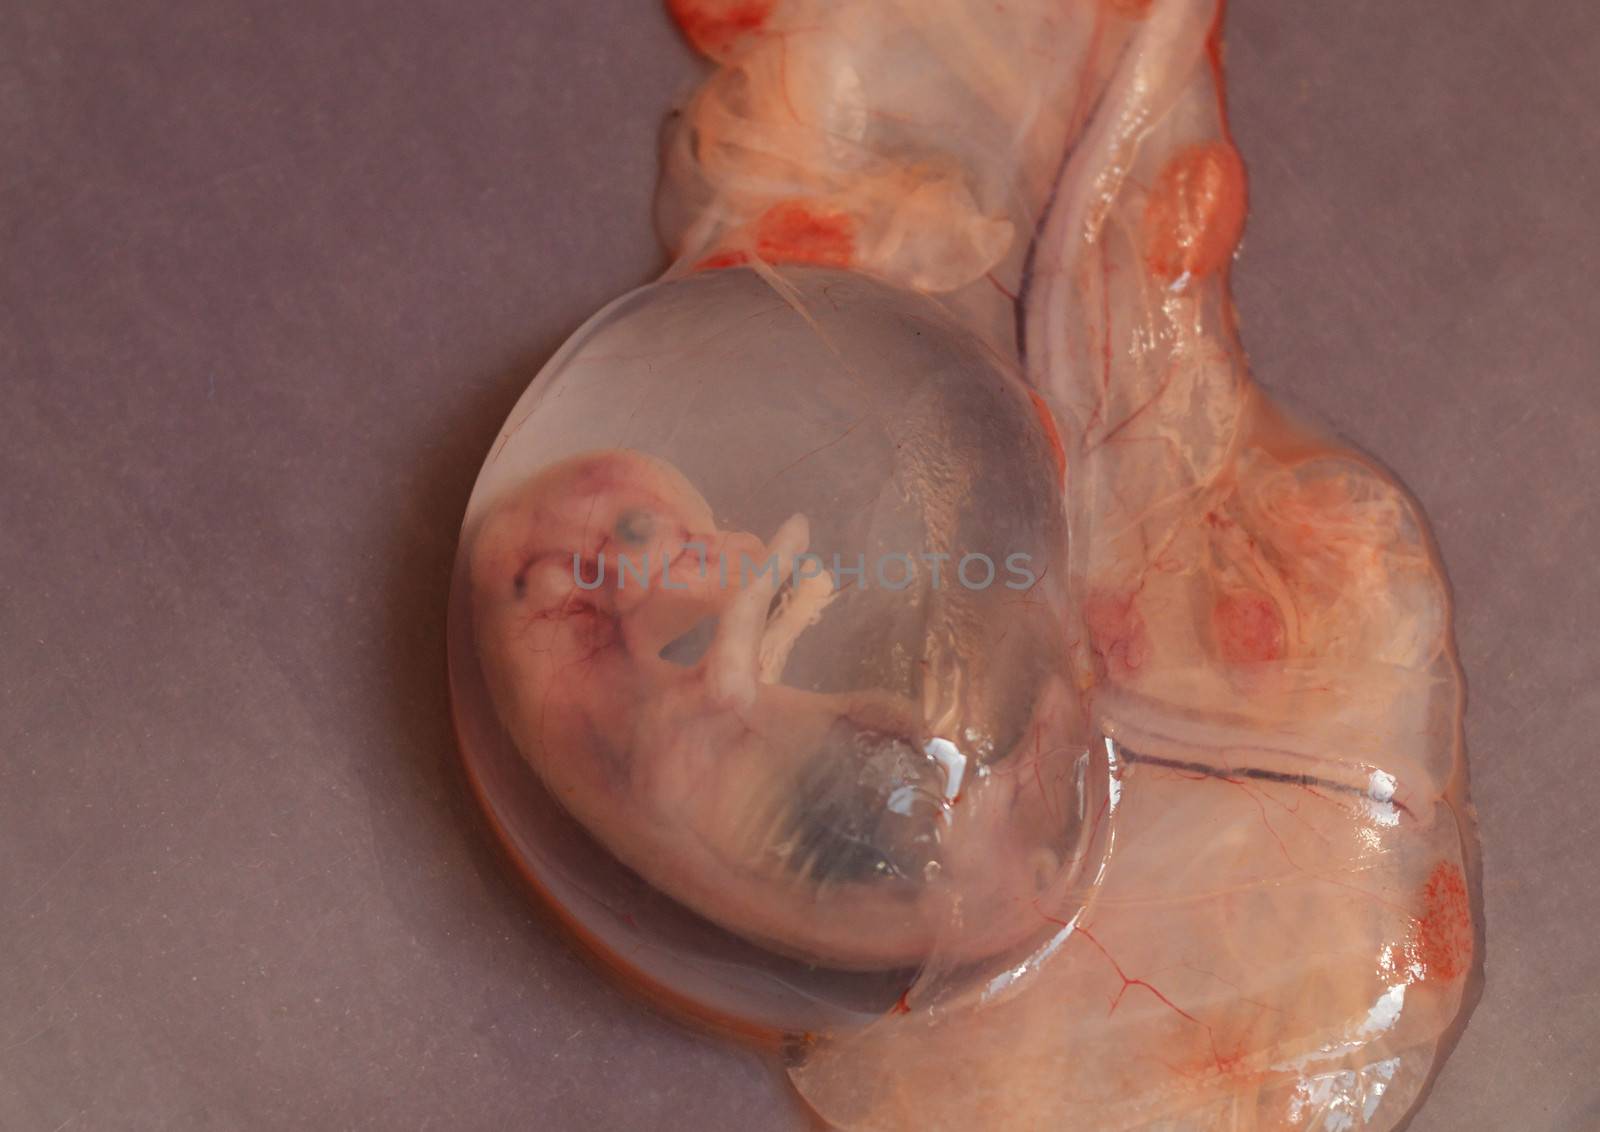 cows aborted embryo